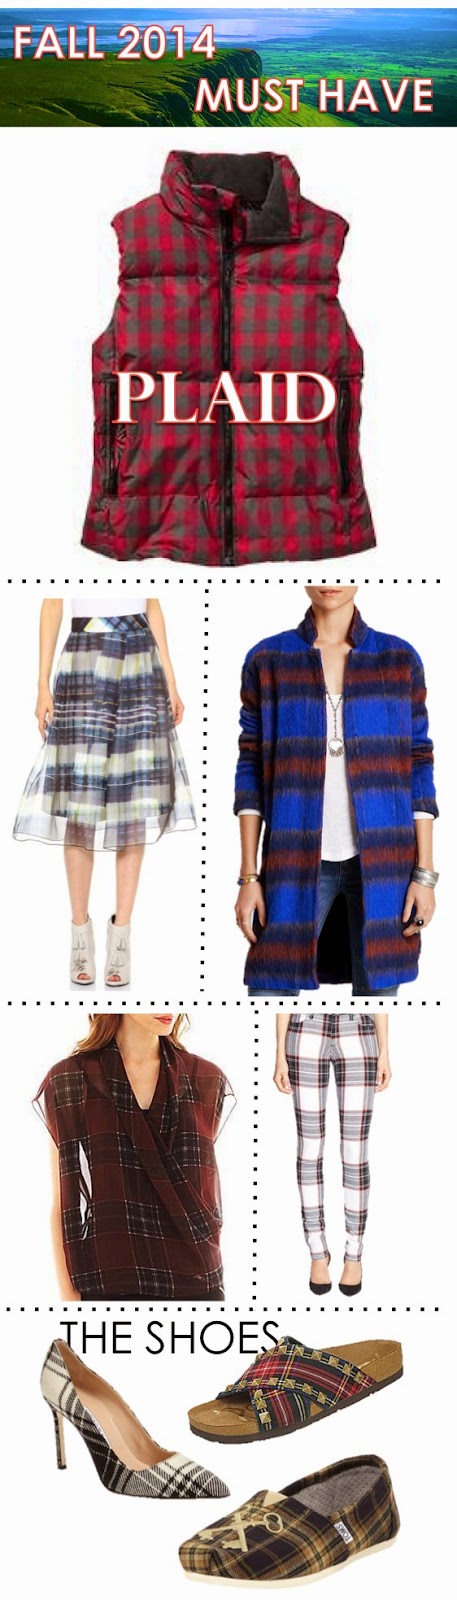 Fall Fashion 2014 Must Have: PLAID on thewellset.com